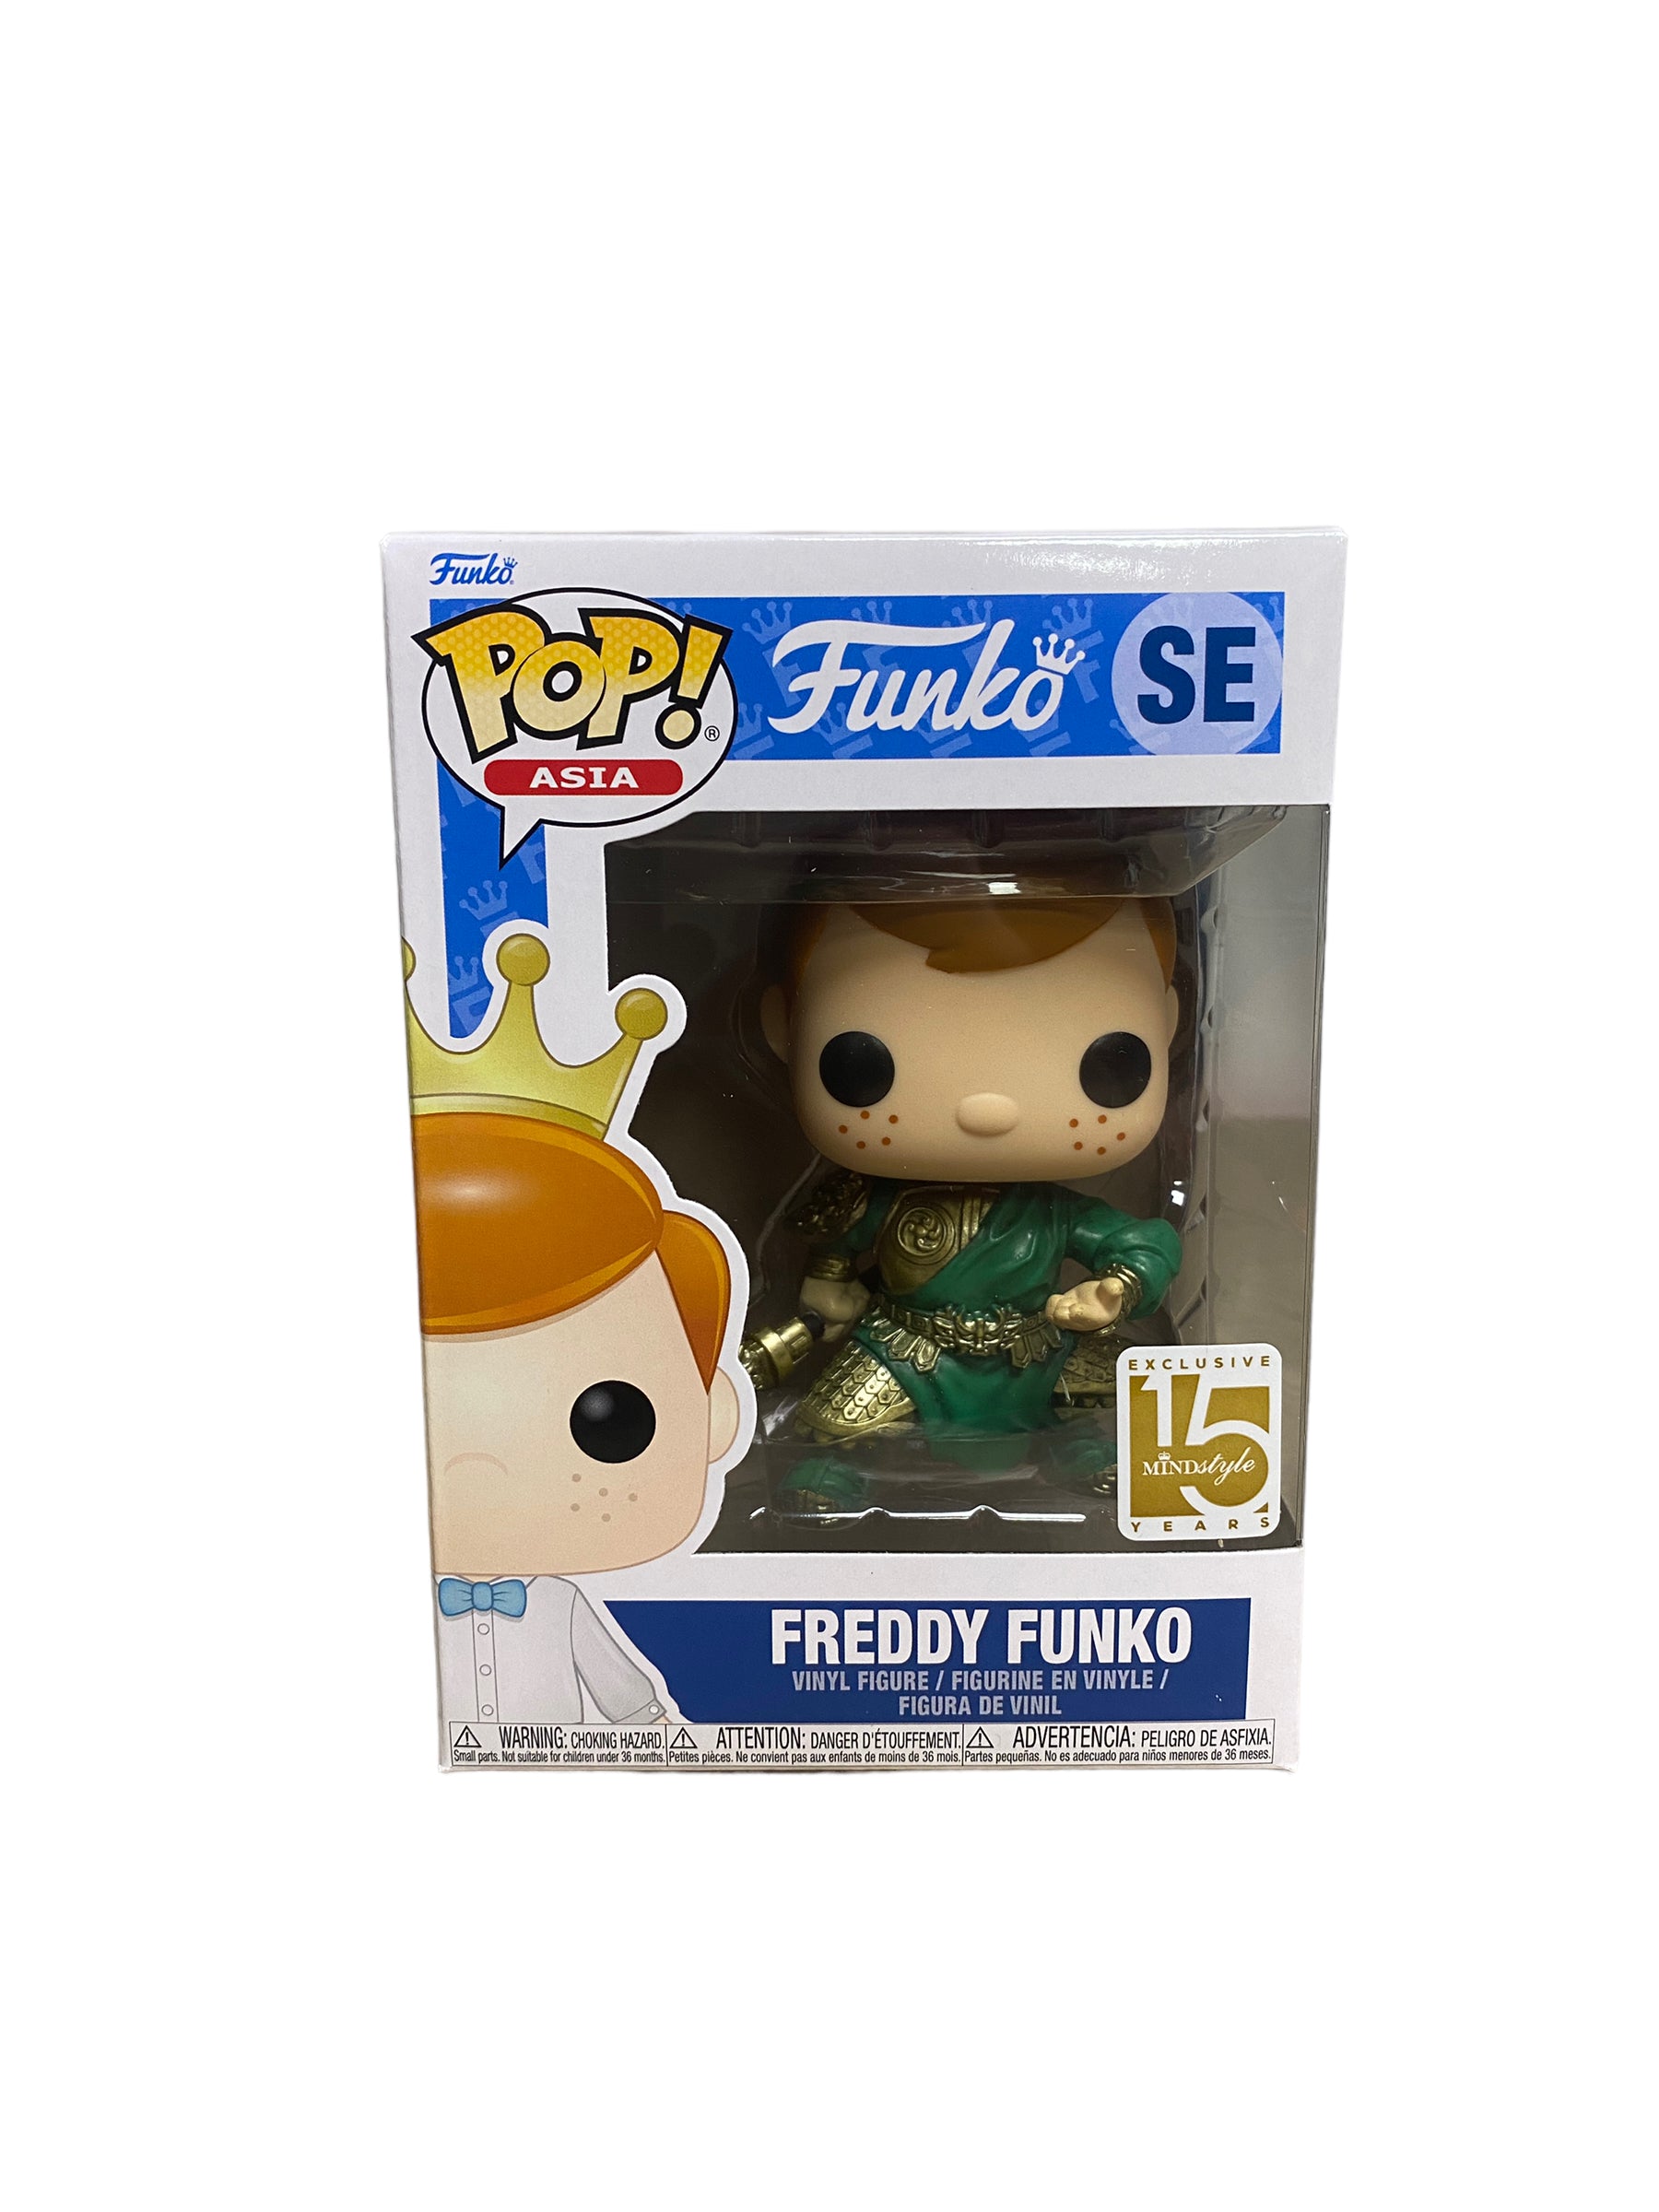 Freddy Funko (Guan Yu) Funko Pop! - Asia - Mindstyle 15th Anniversary Exclusive - Condition 9/10